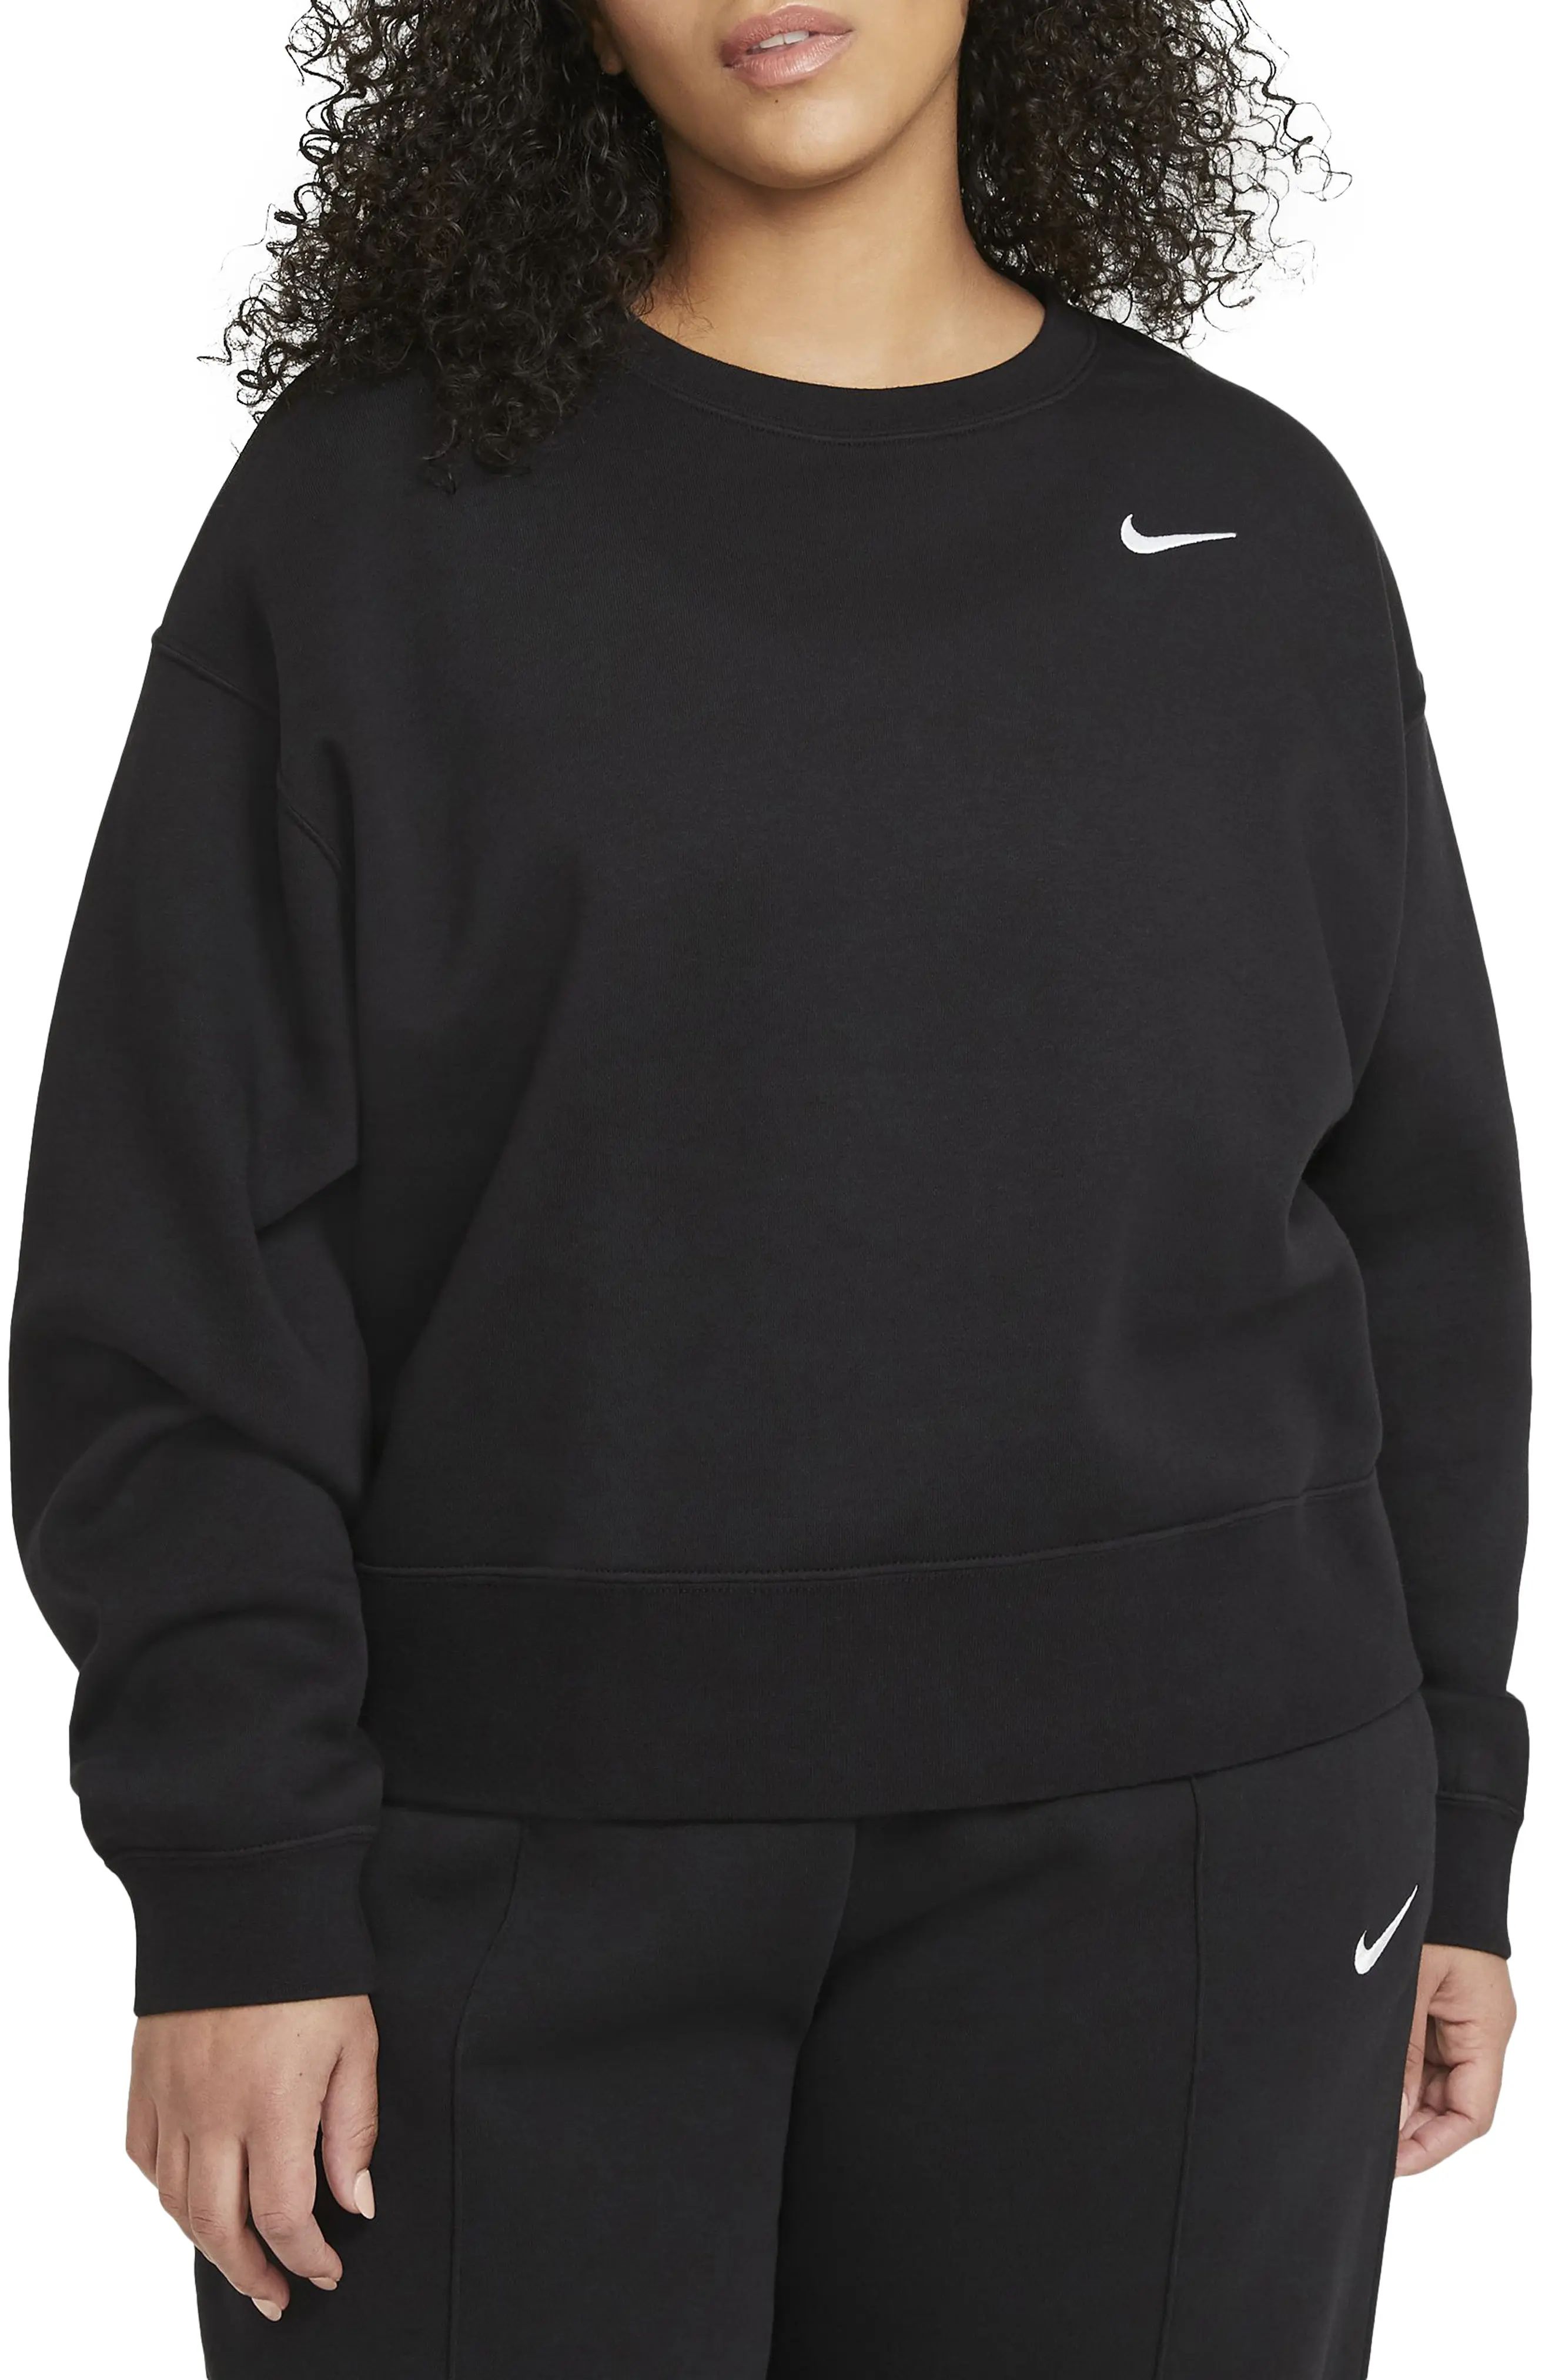 Nike Sportswear Fleece Crewneck Sweatshirt in Black/White at Nordstrom, Size 3X | Nordstrom